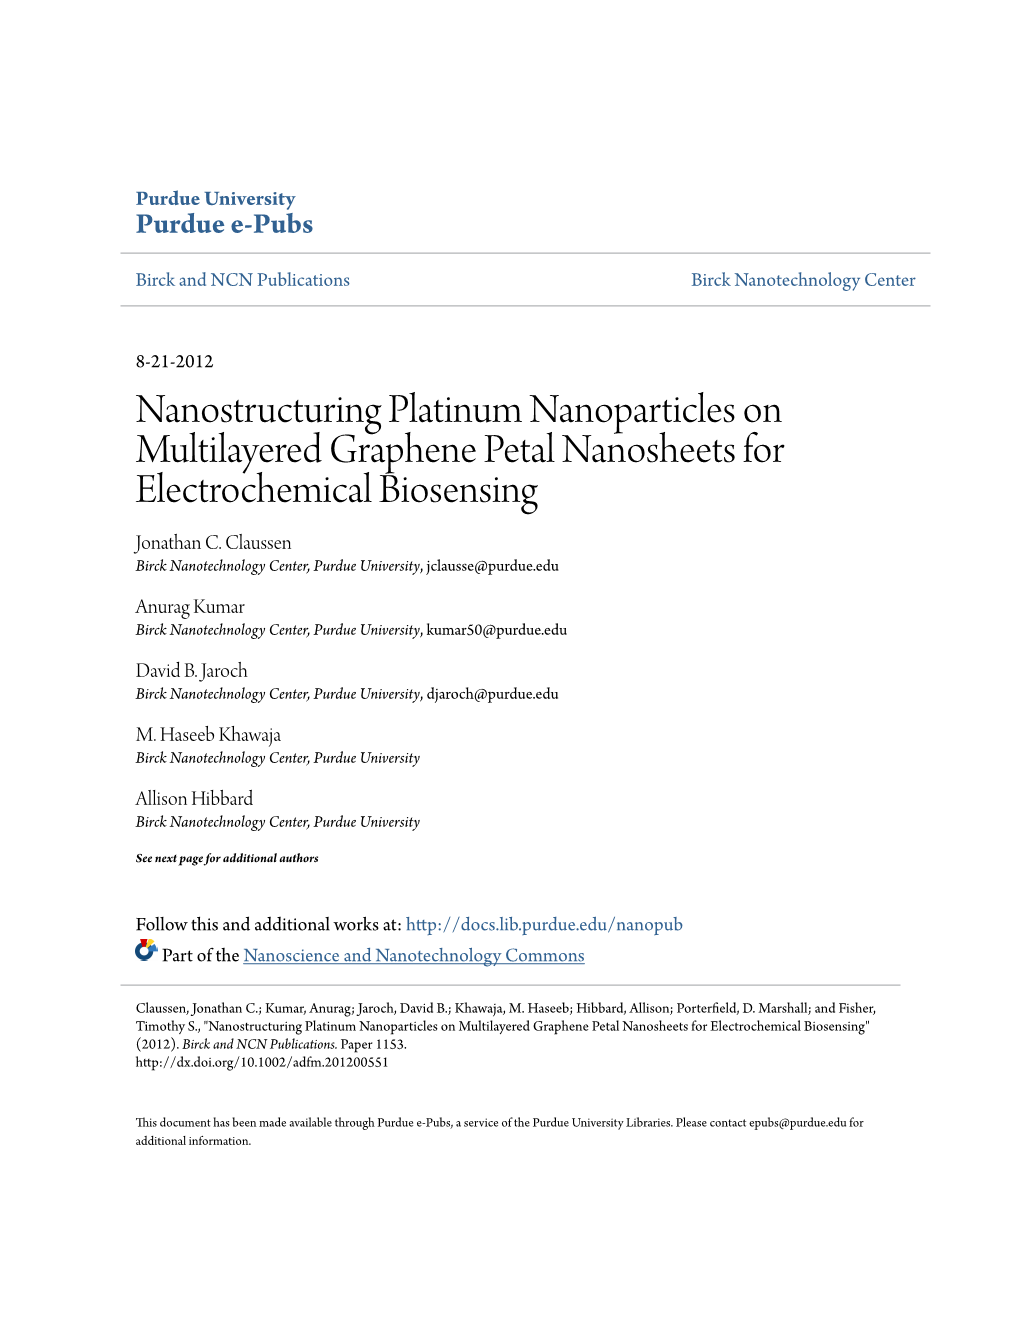 Nanostructuring Platinum Nanoparticles on Multilayered Graphene Petal Nanosheets for Electrochemical Biosensing Jonathan C